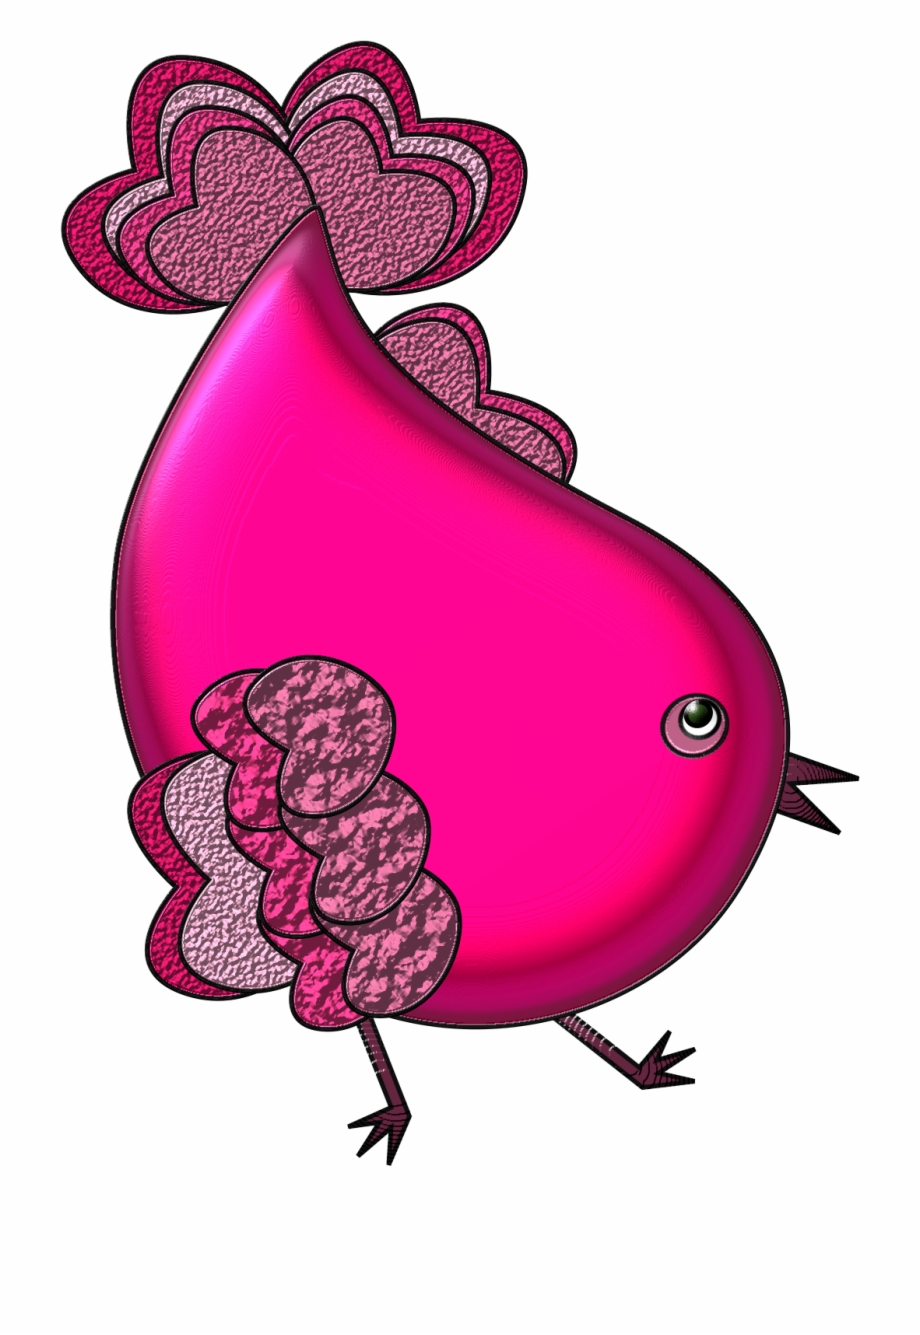 birdhouse clipart pink